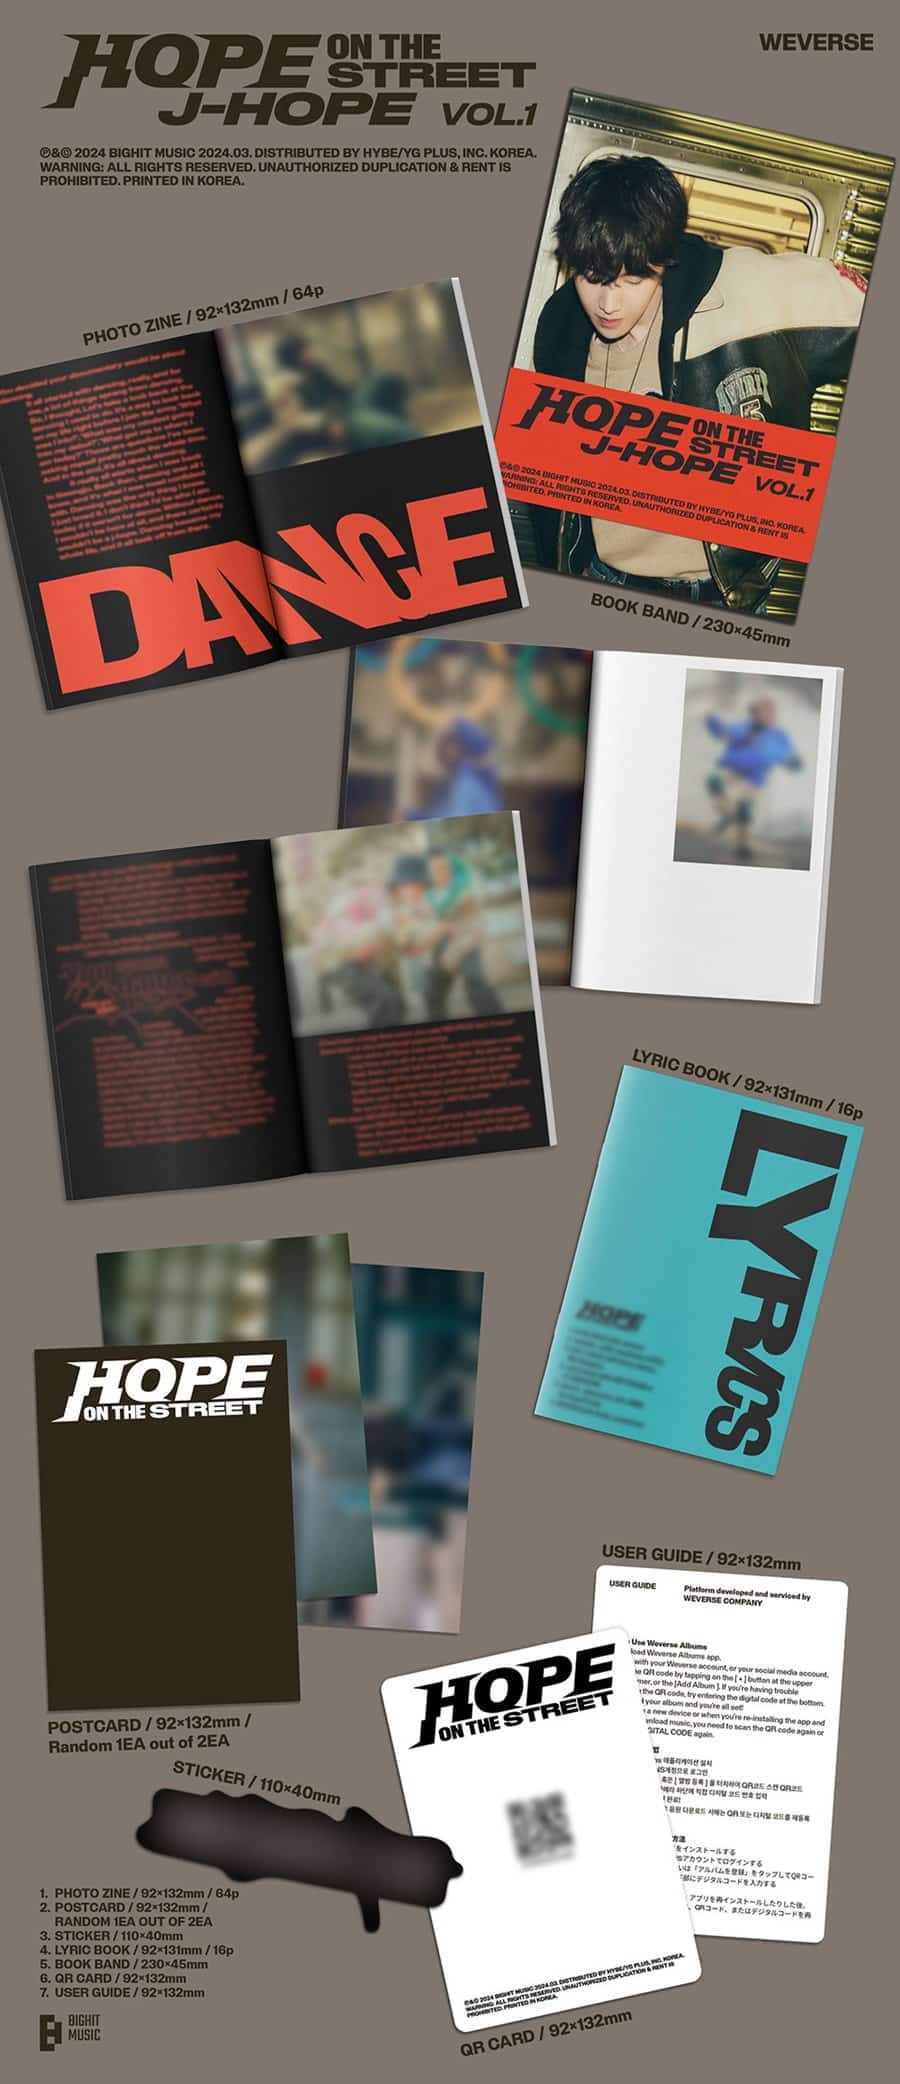 j-hope-hope-on-the-street-vol-1-weverse-albums-ver-wholesales